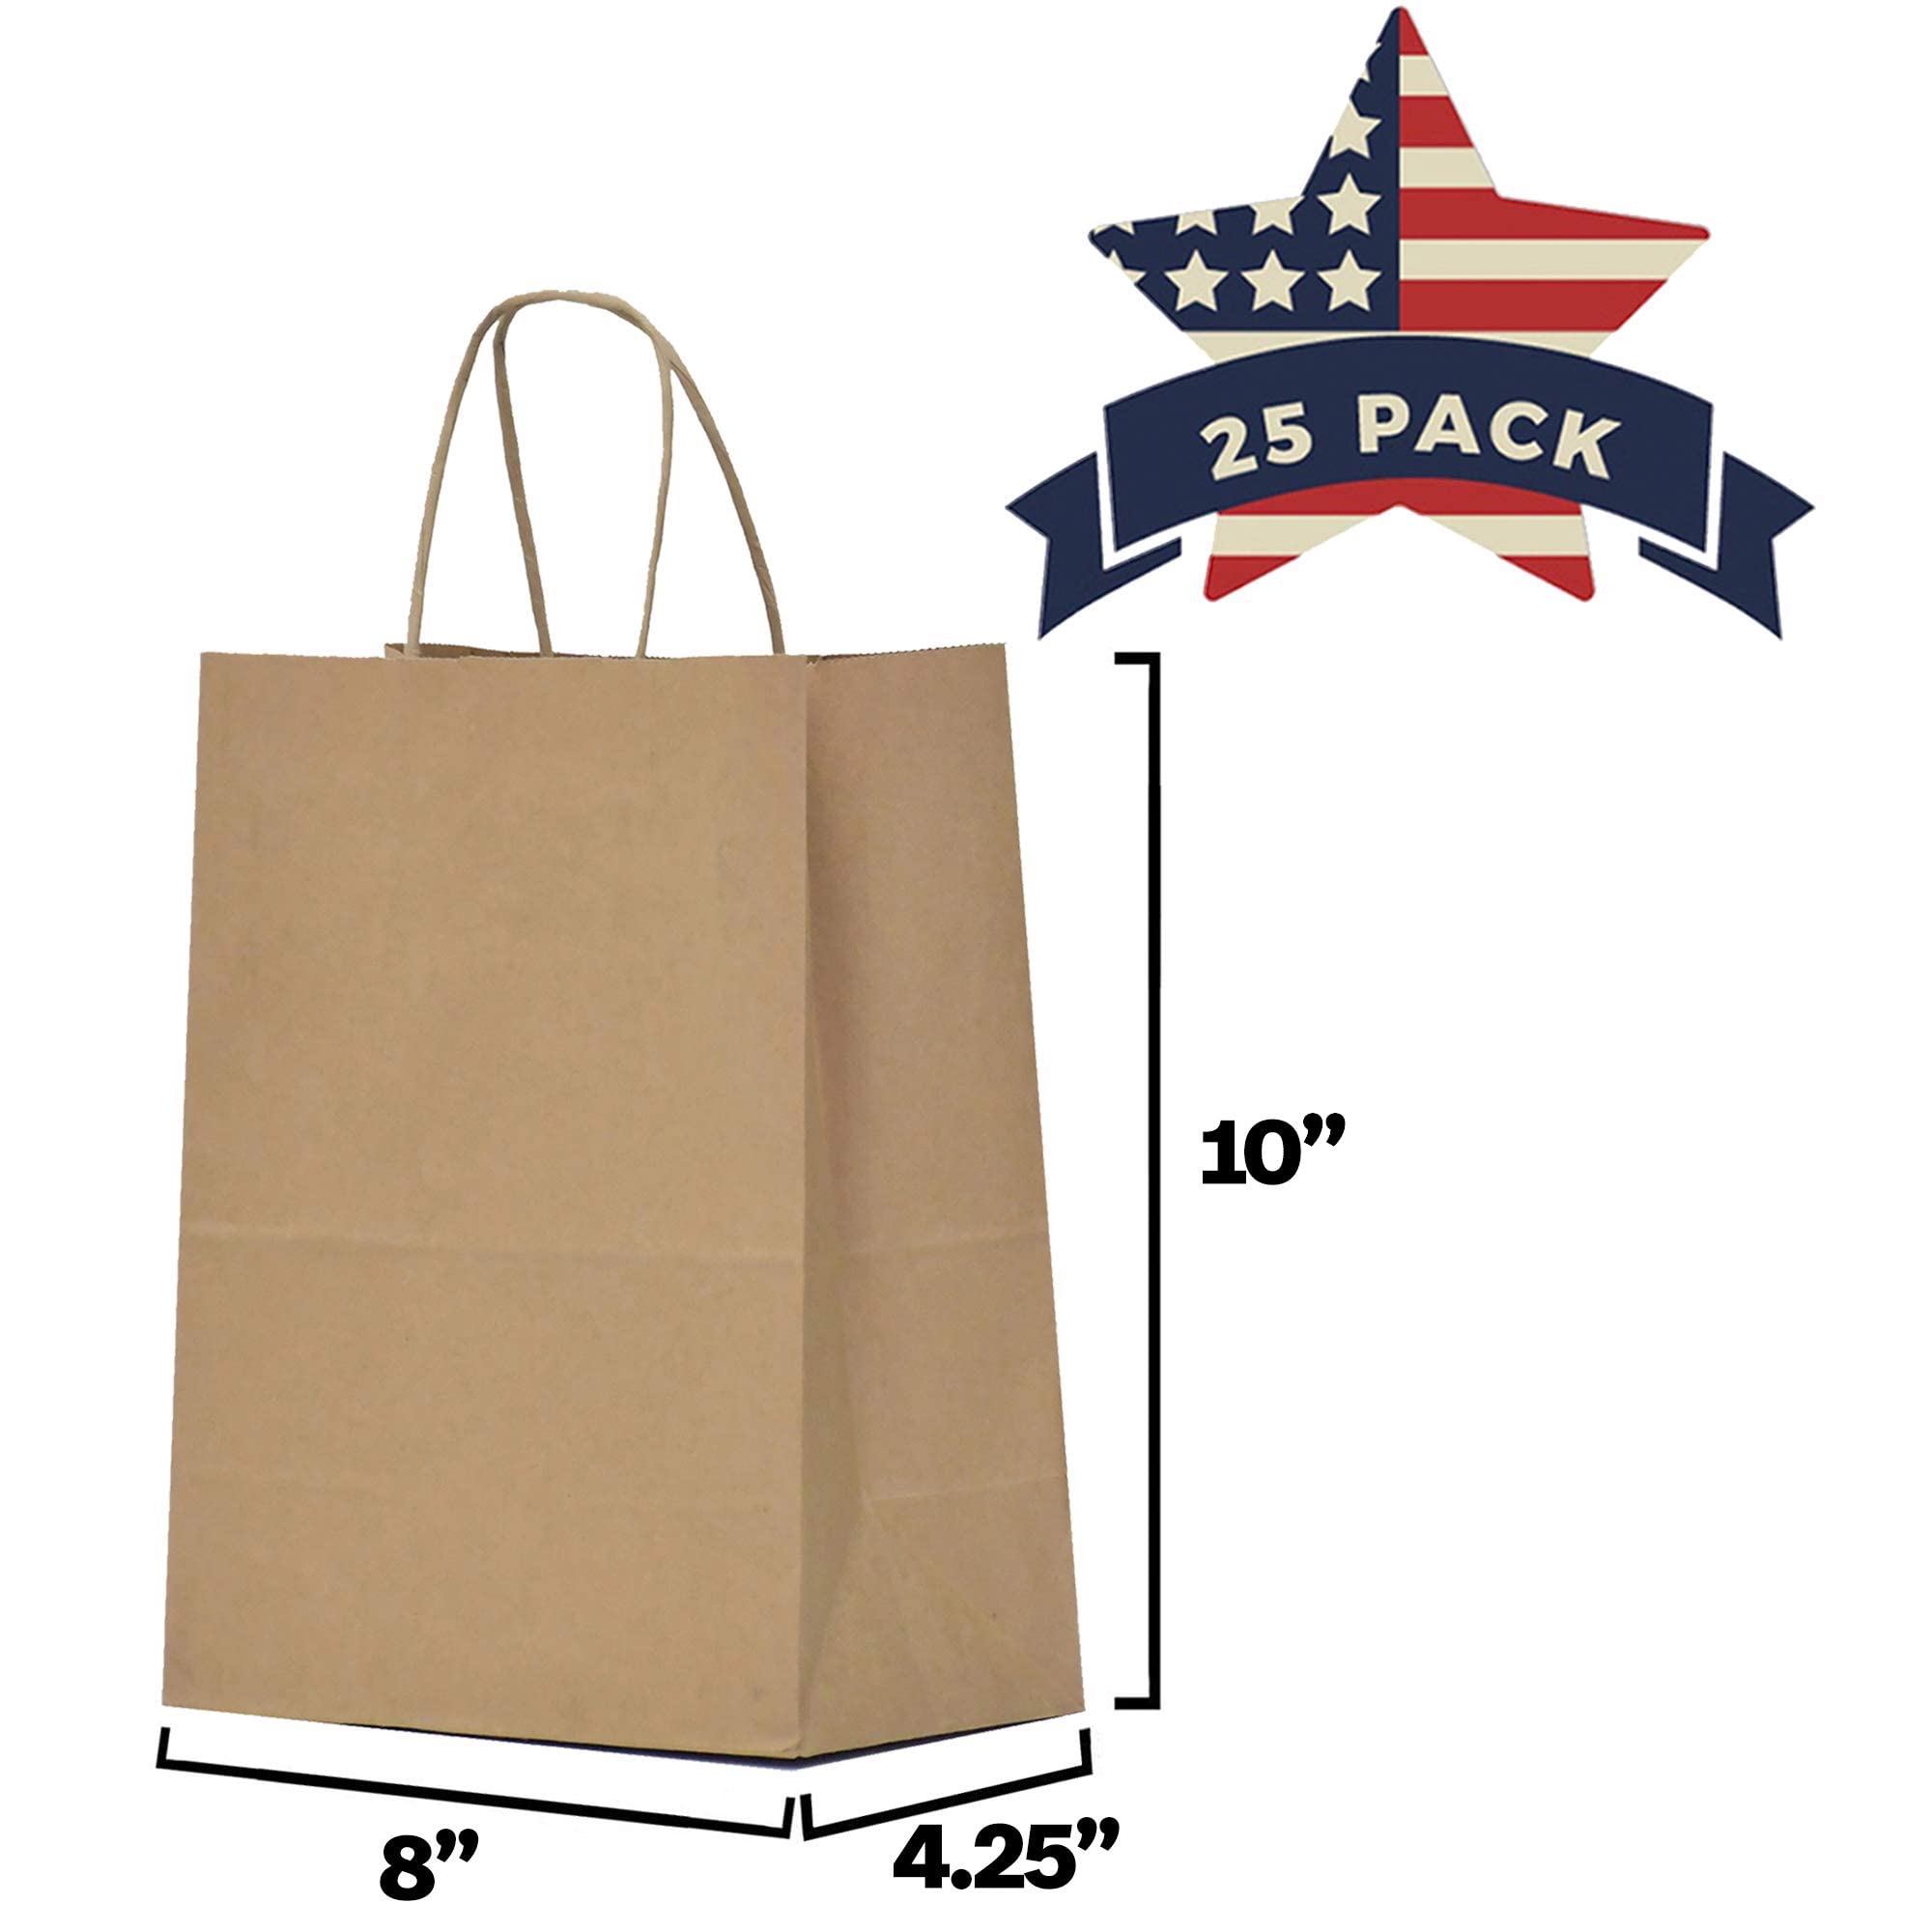 Qutuus Kraft Paper Gift Bags with Handles - 8x4.25x10 25 Pcs Brown Shopping Bags, Party Bags, Goody Bags, Cub, Favor Bags, Business Bags, Kraft Bags, Retail Bags